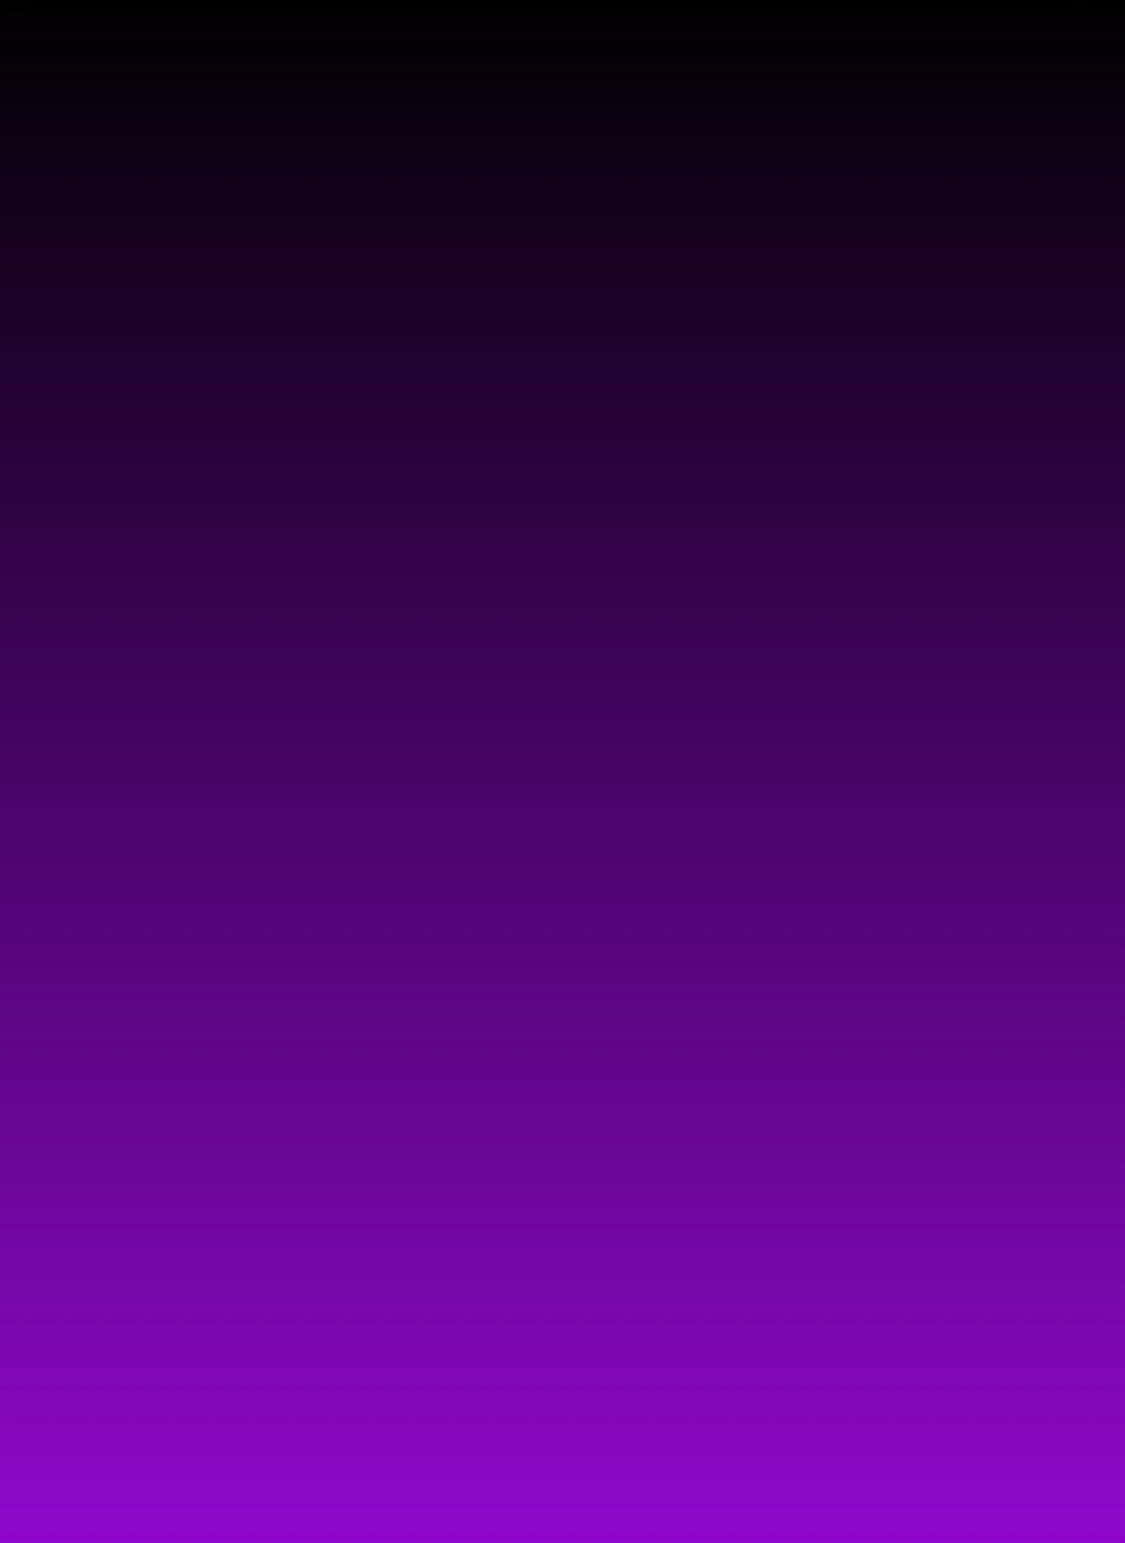 A Purple Gradient Background that Evokes a Sense of Creativity